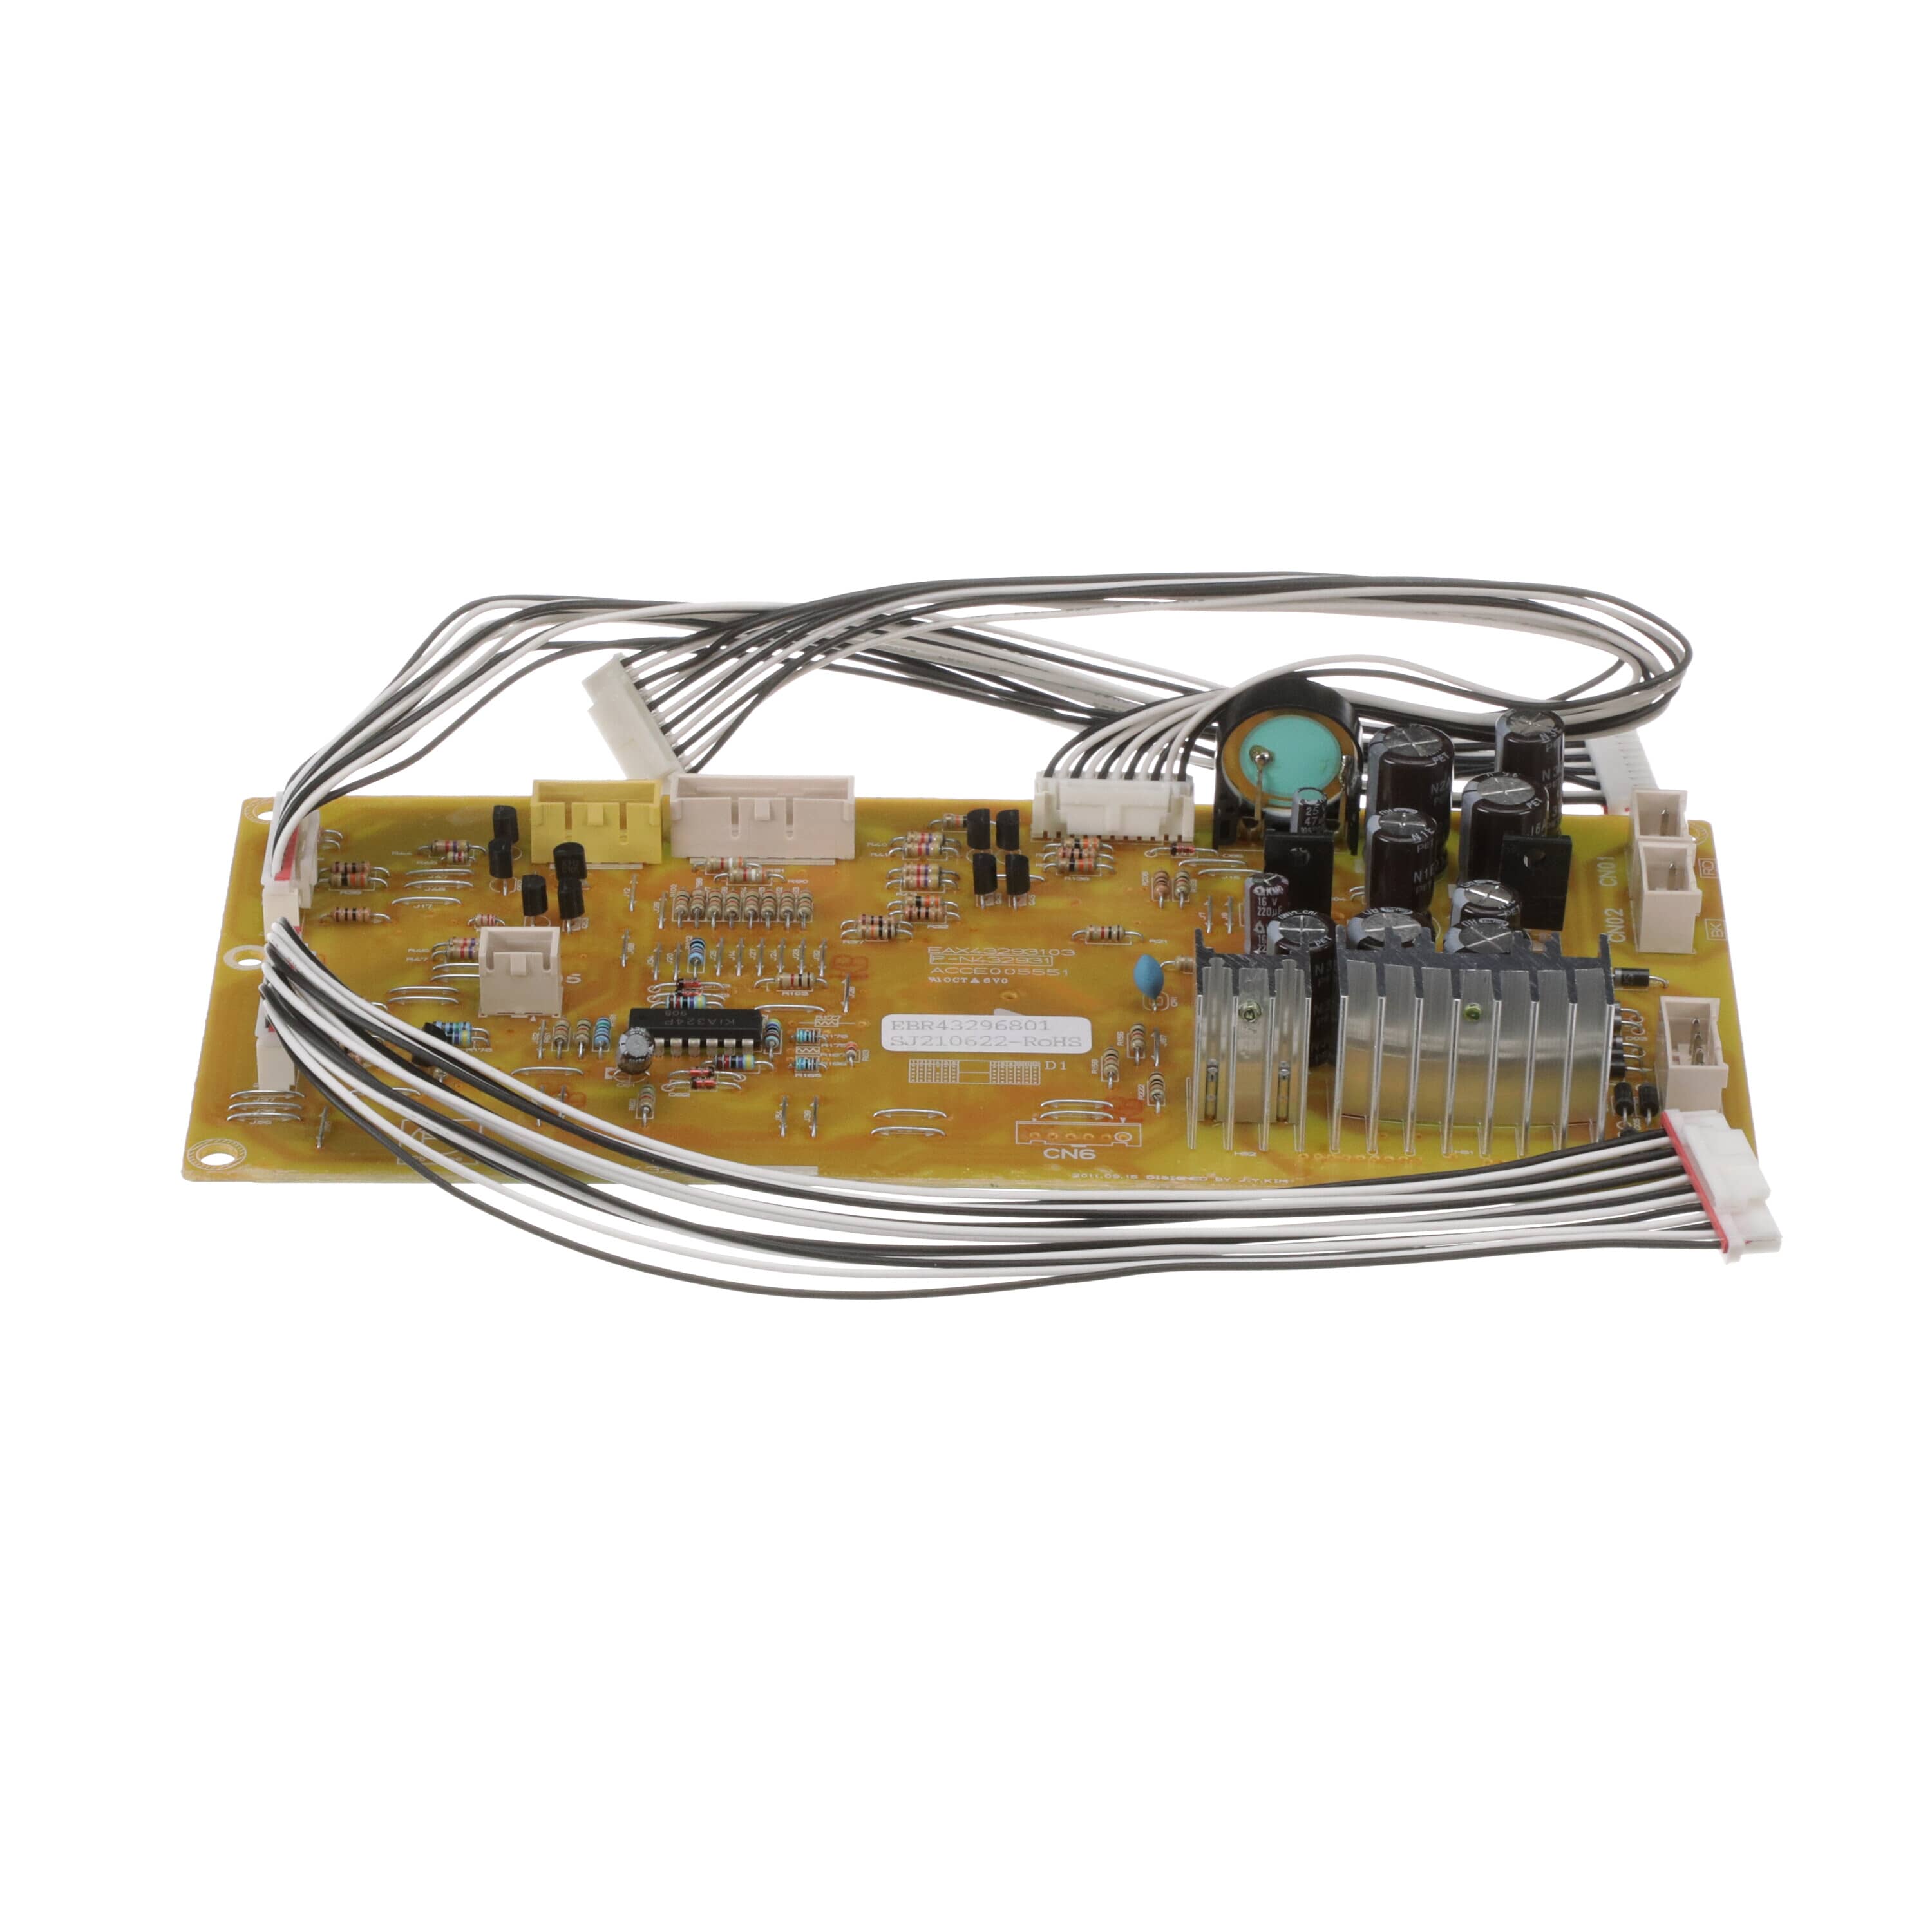 LG EBR43296801 Range/Wall Oven Main PCB Assembly